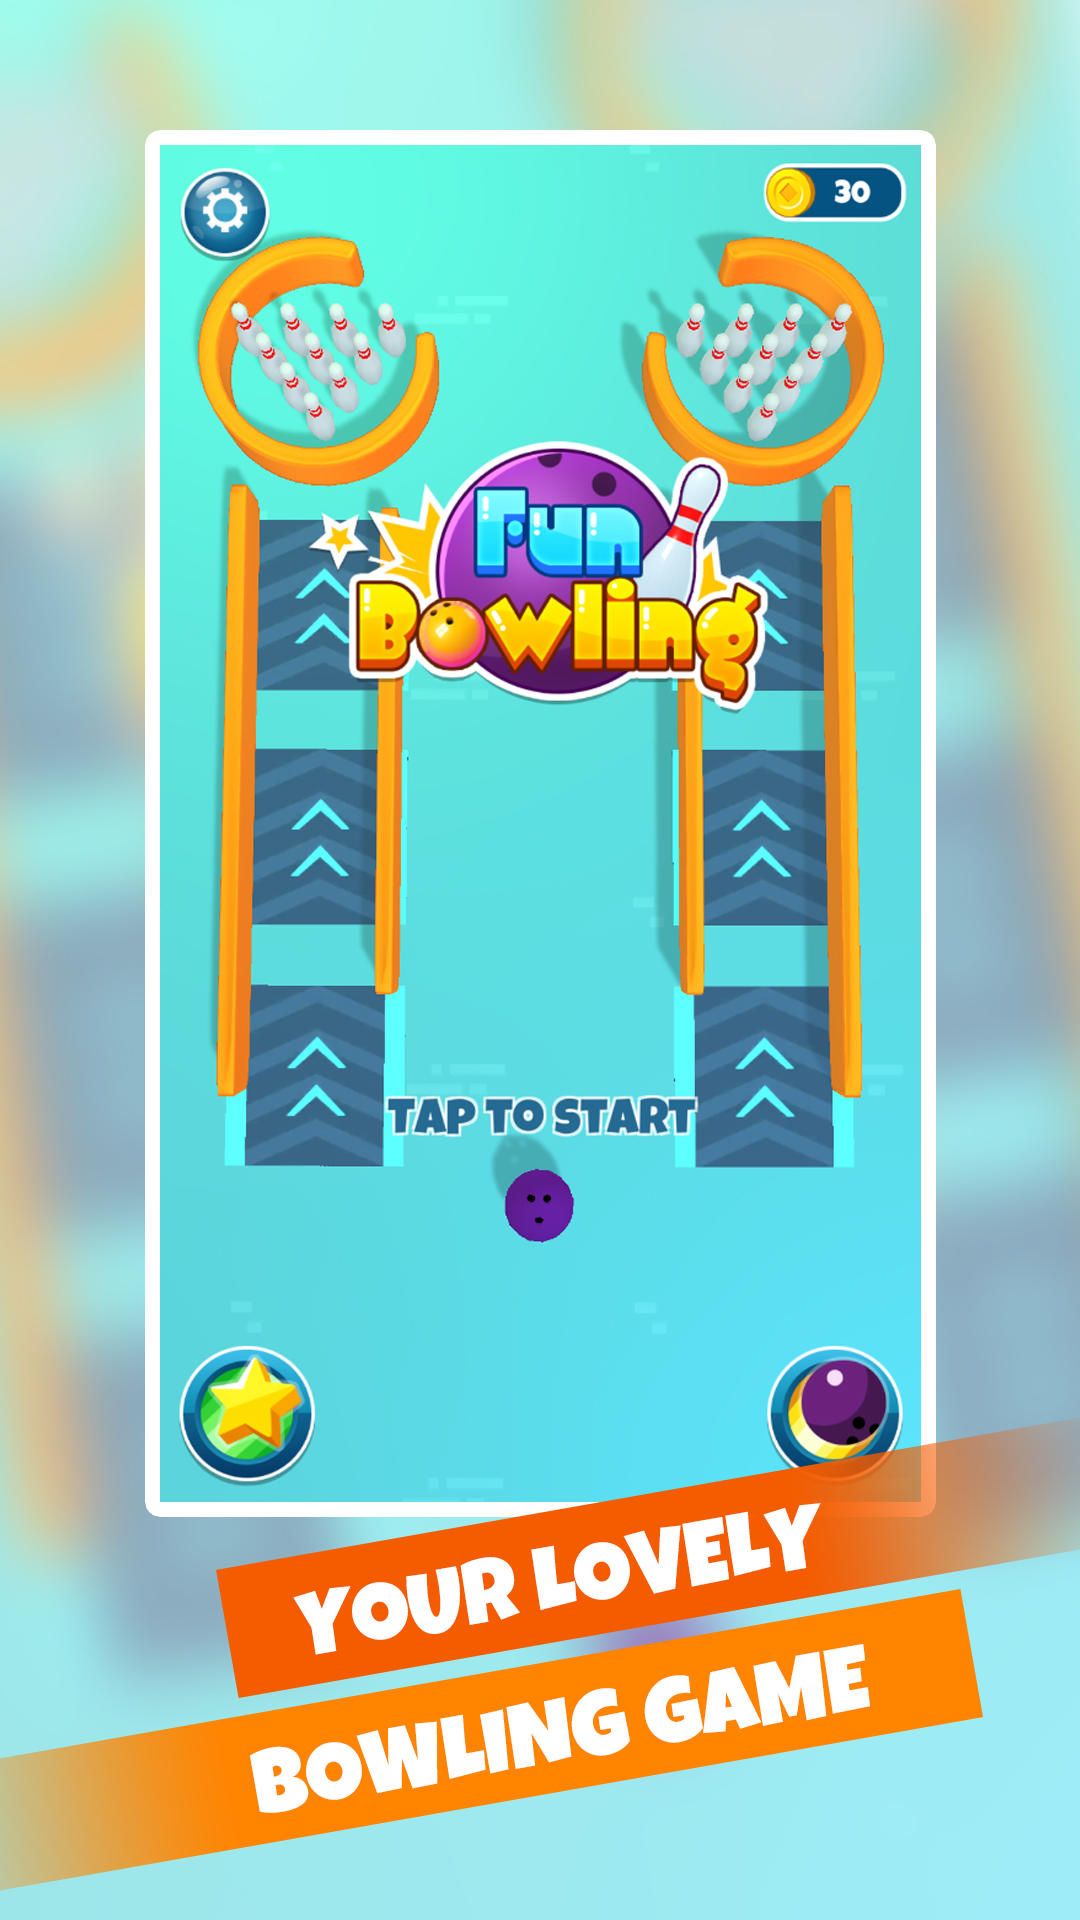 Screenshot 1 of chơi bowling vui vẻ 1.0.2